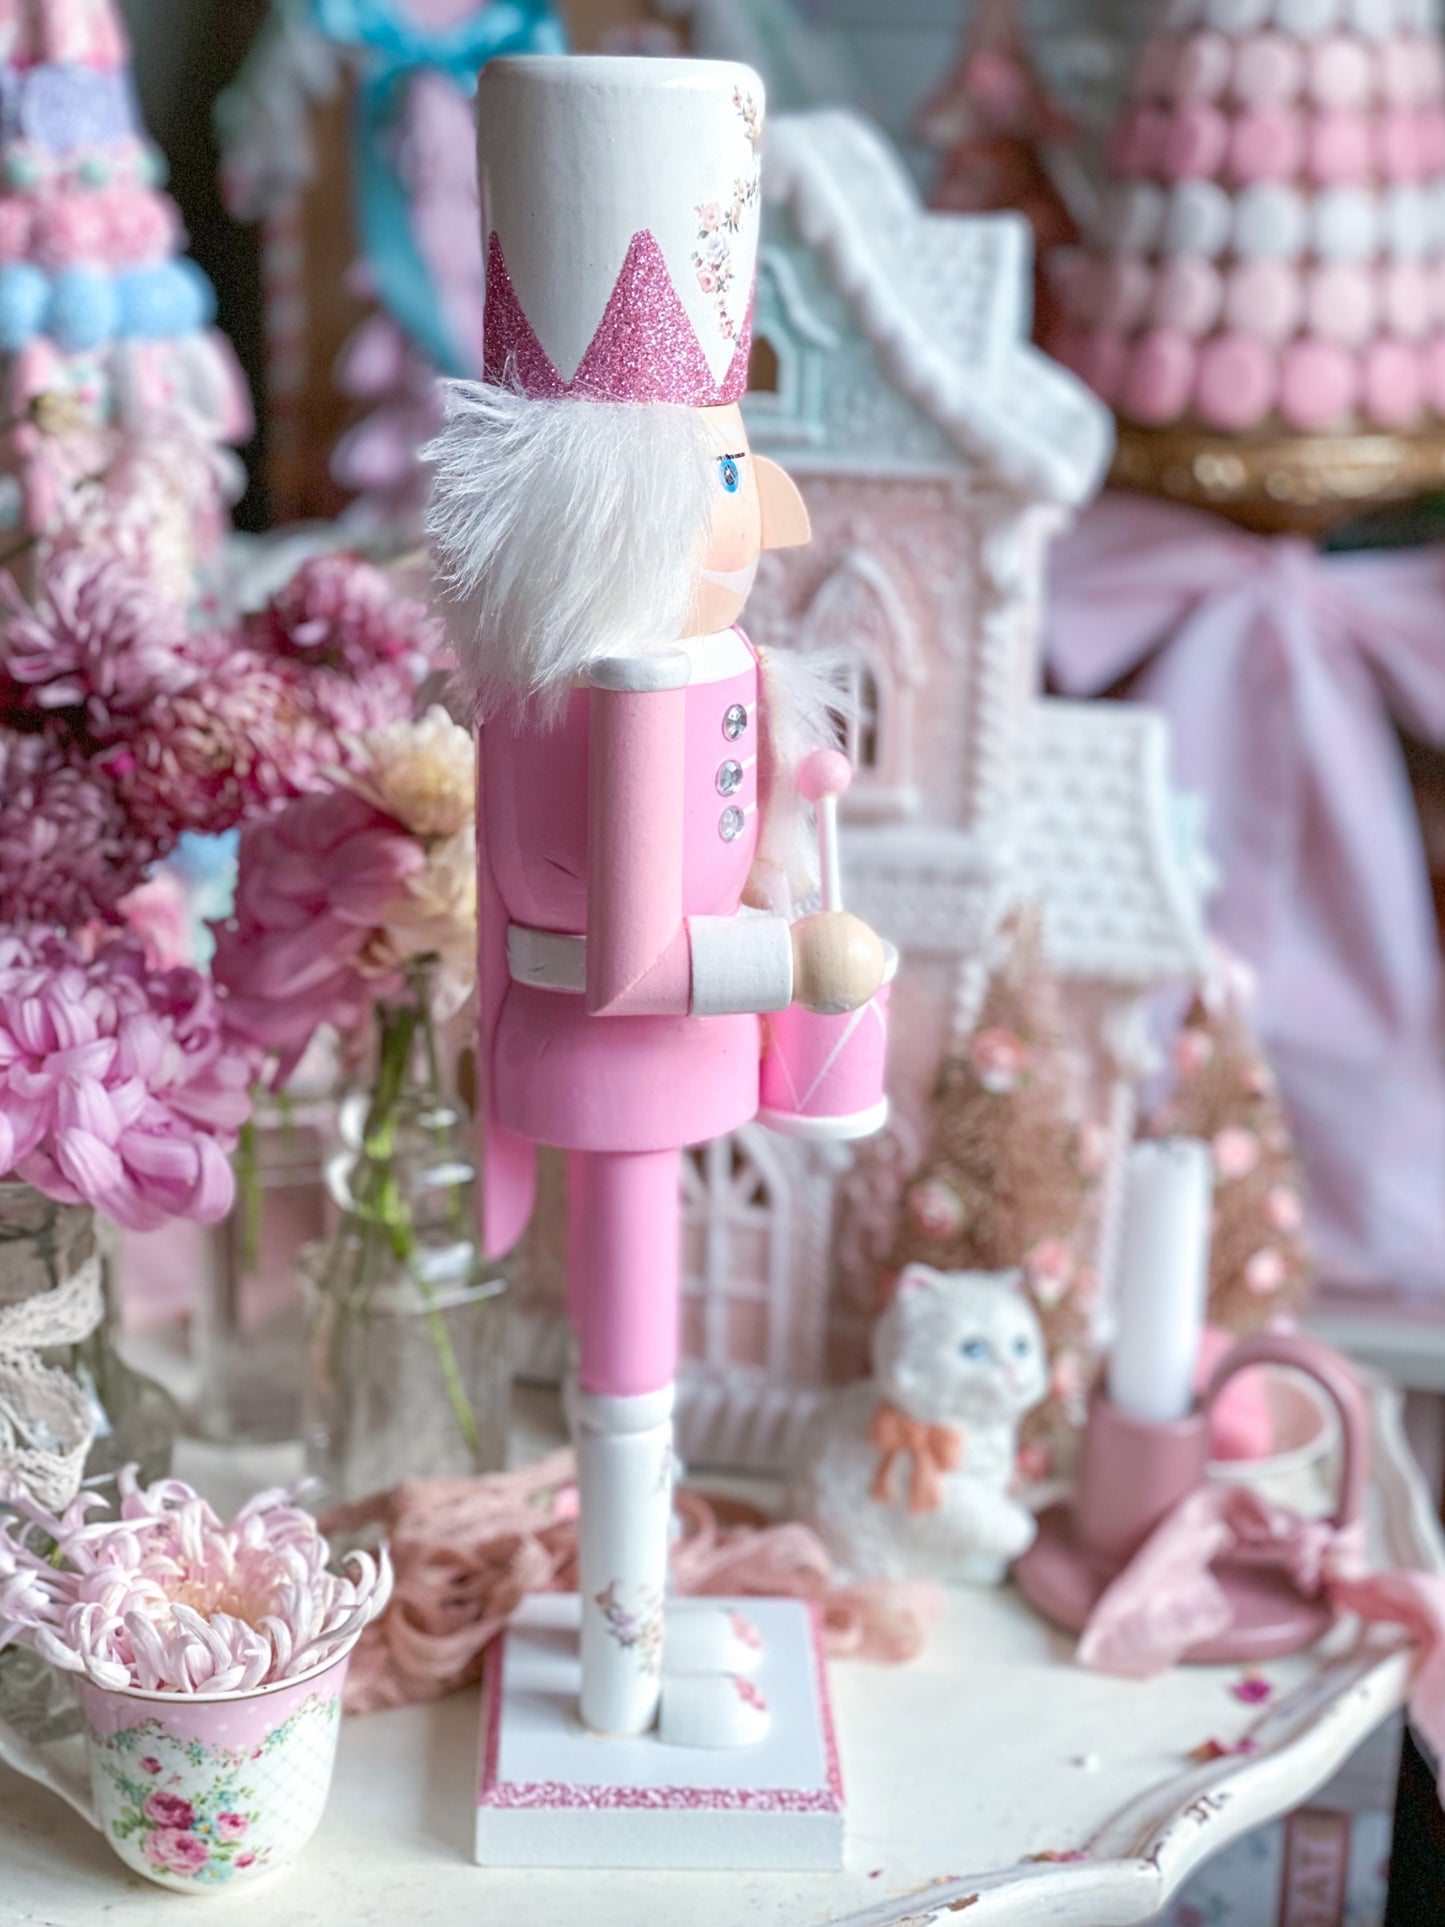 Bespoke Pastel Pink Glitter Drummer Nutcracker with Floral Boots